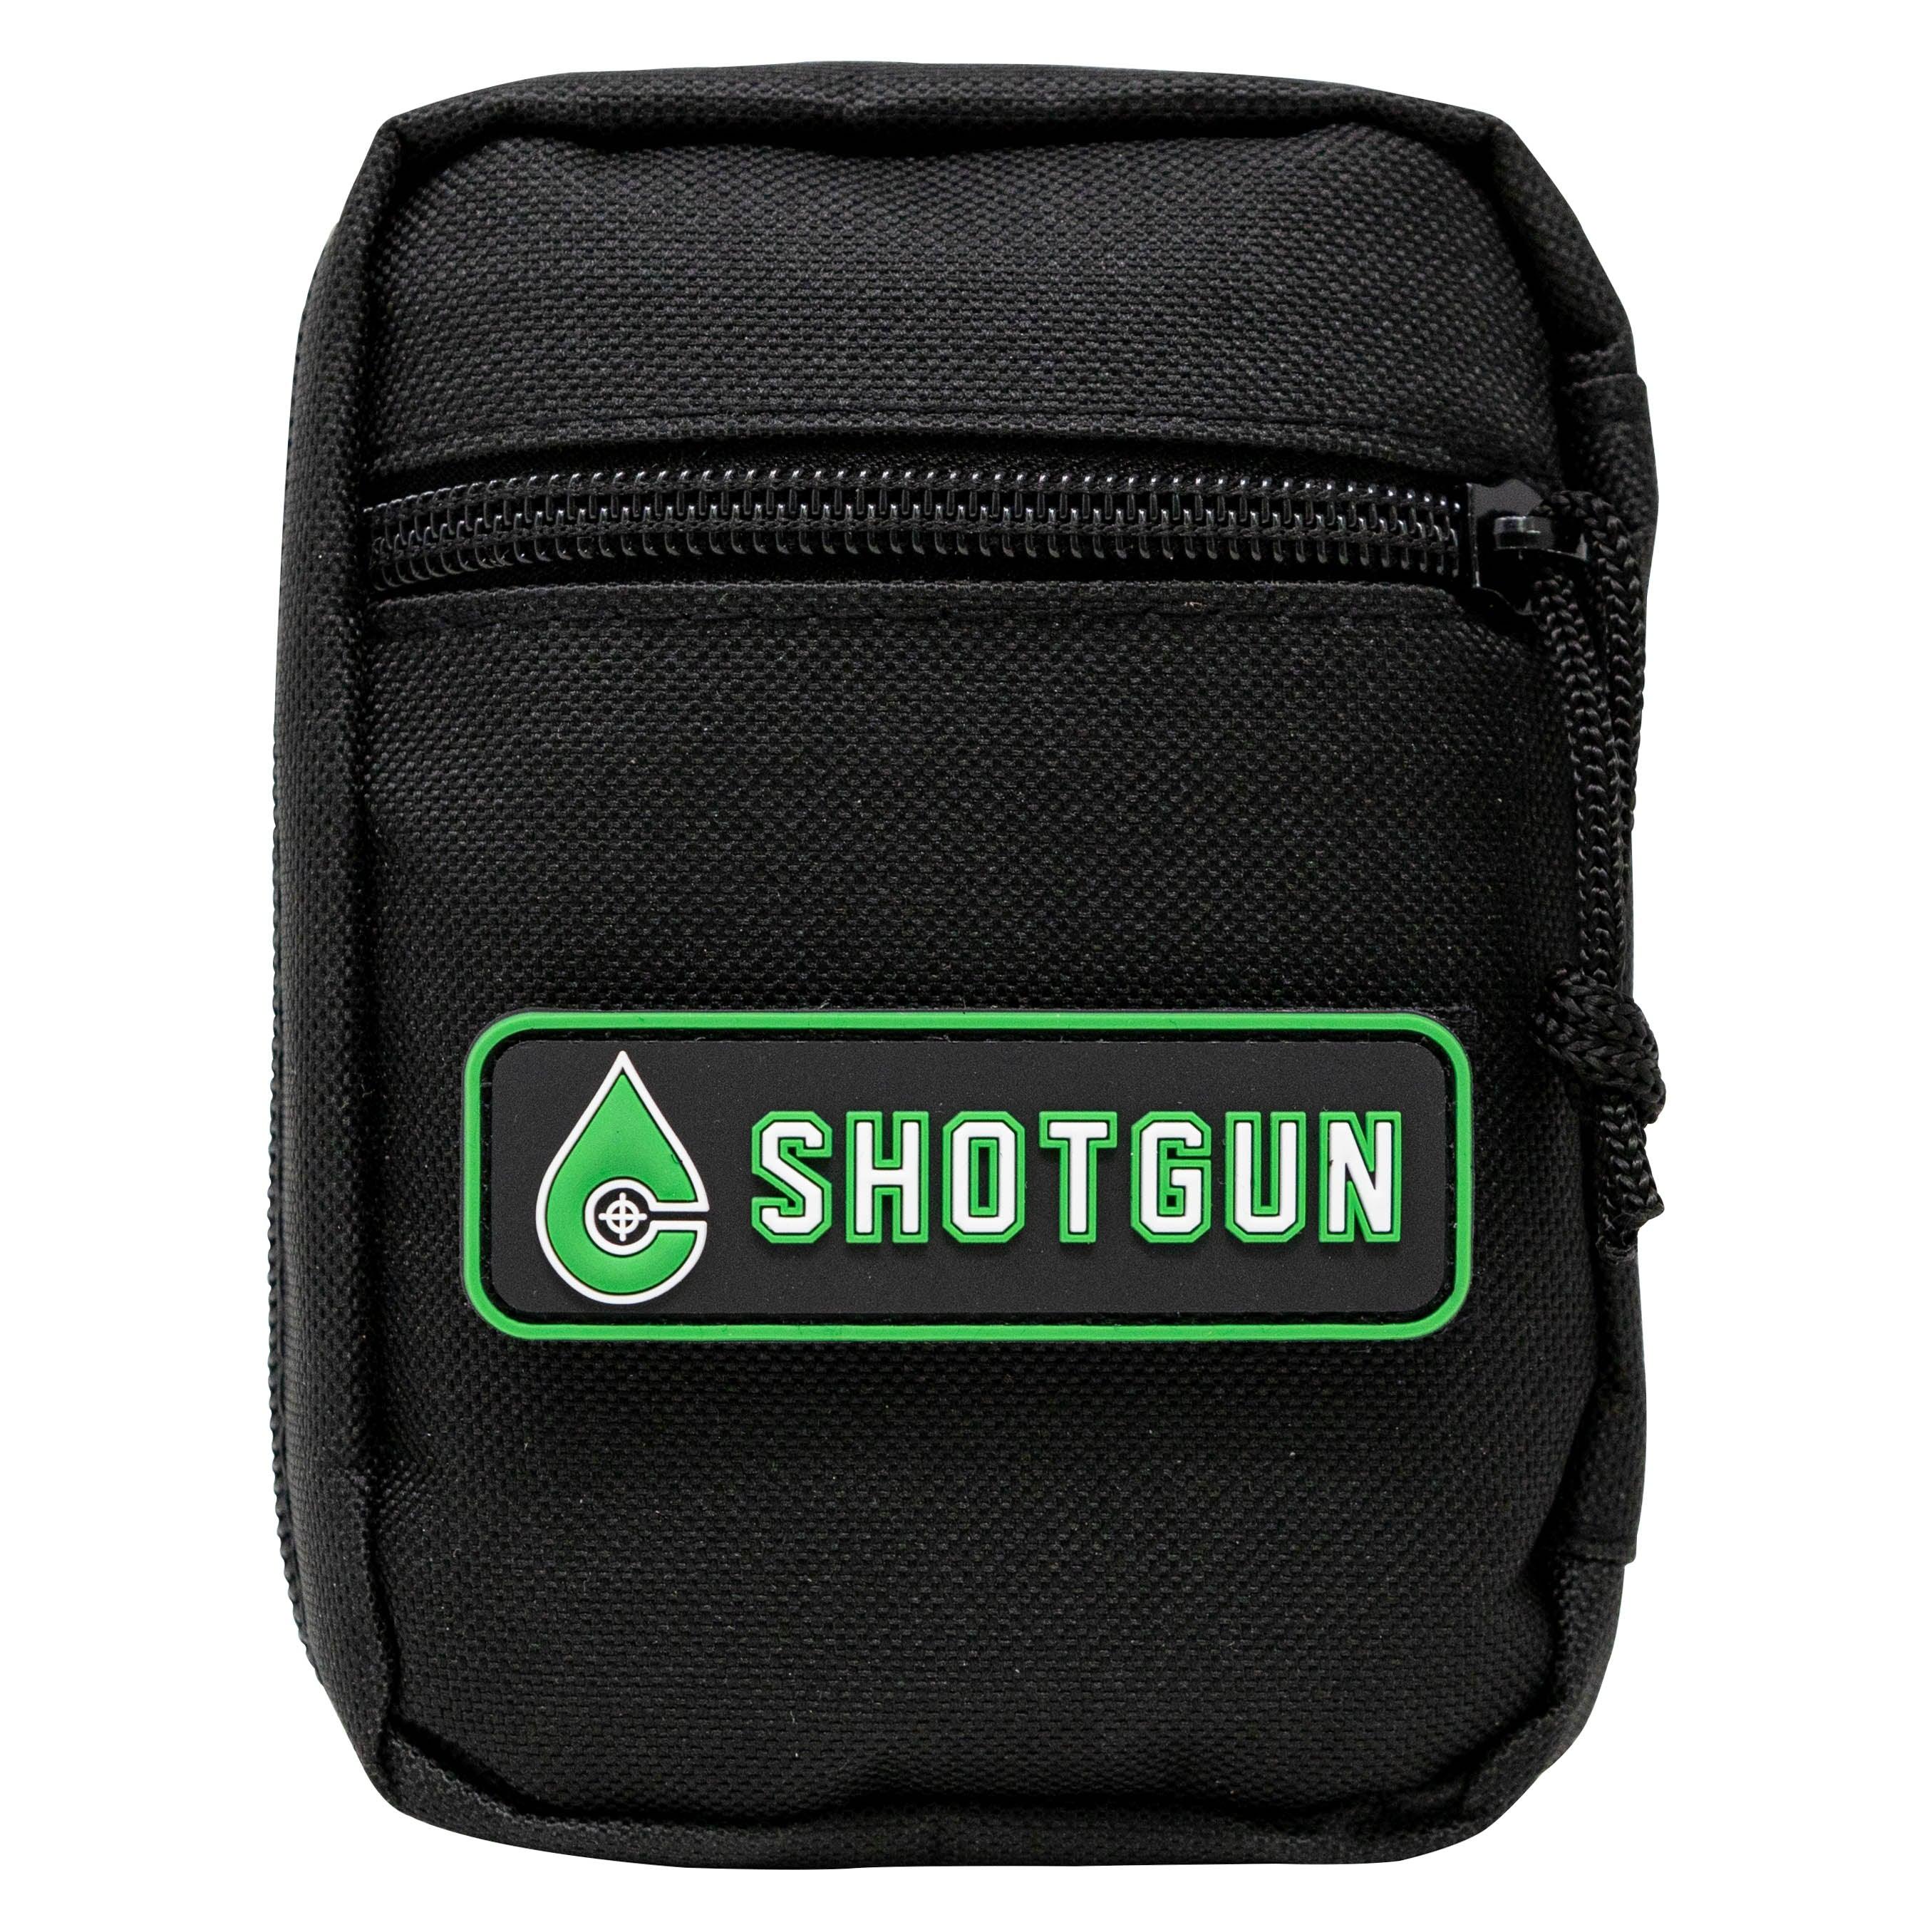 Multi-Gauge Shotgun Kit - Clenzoil Unlimited